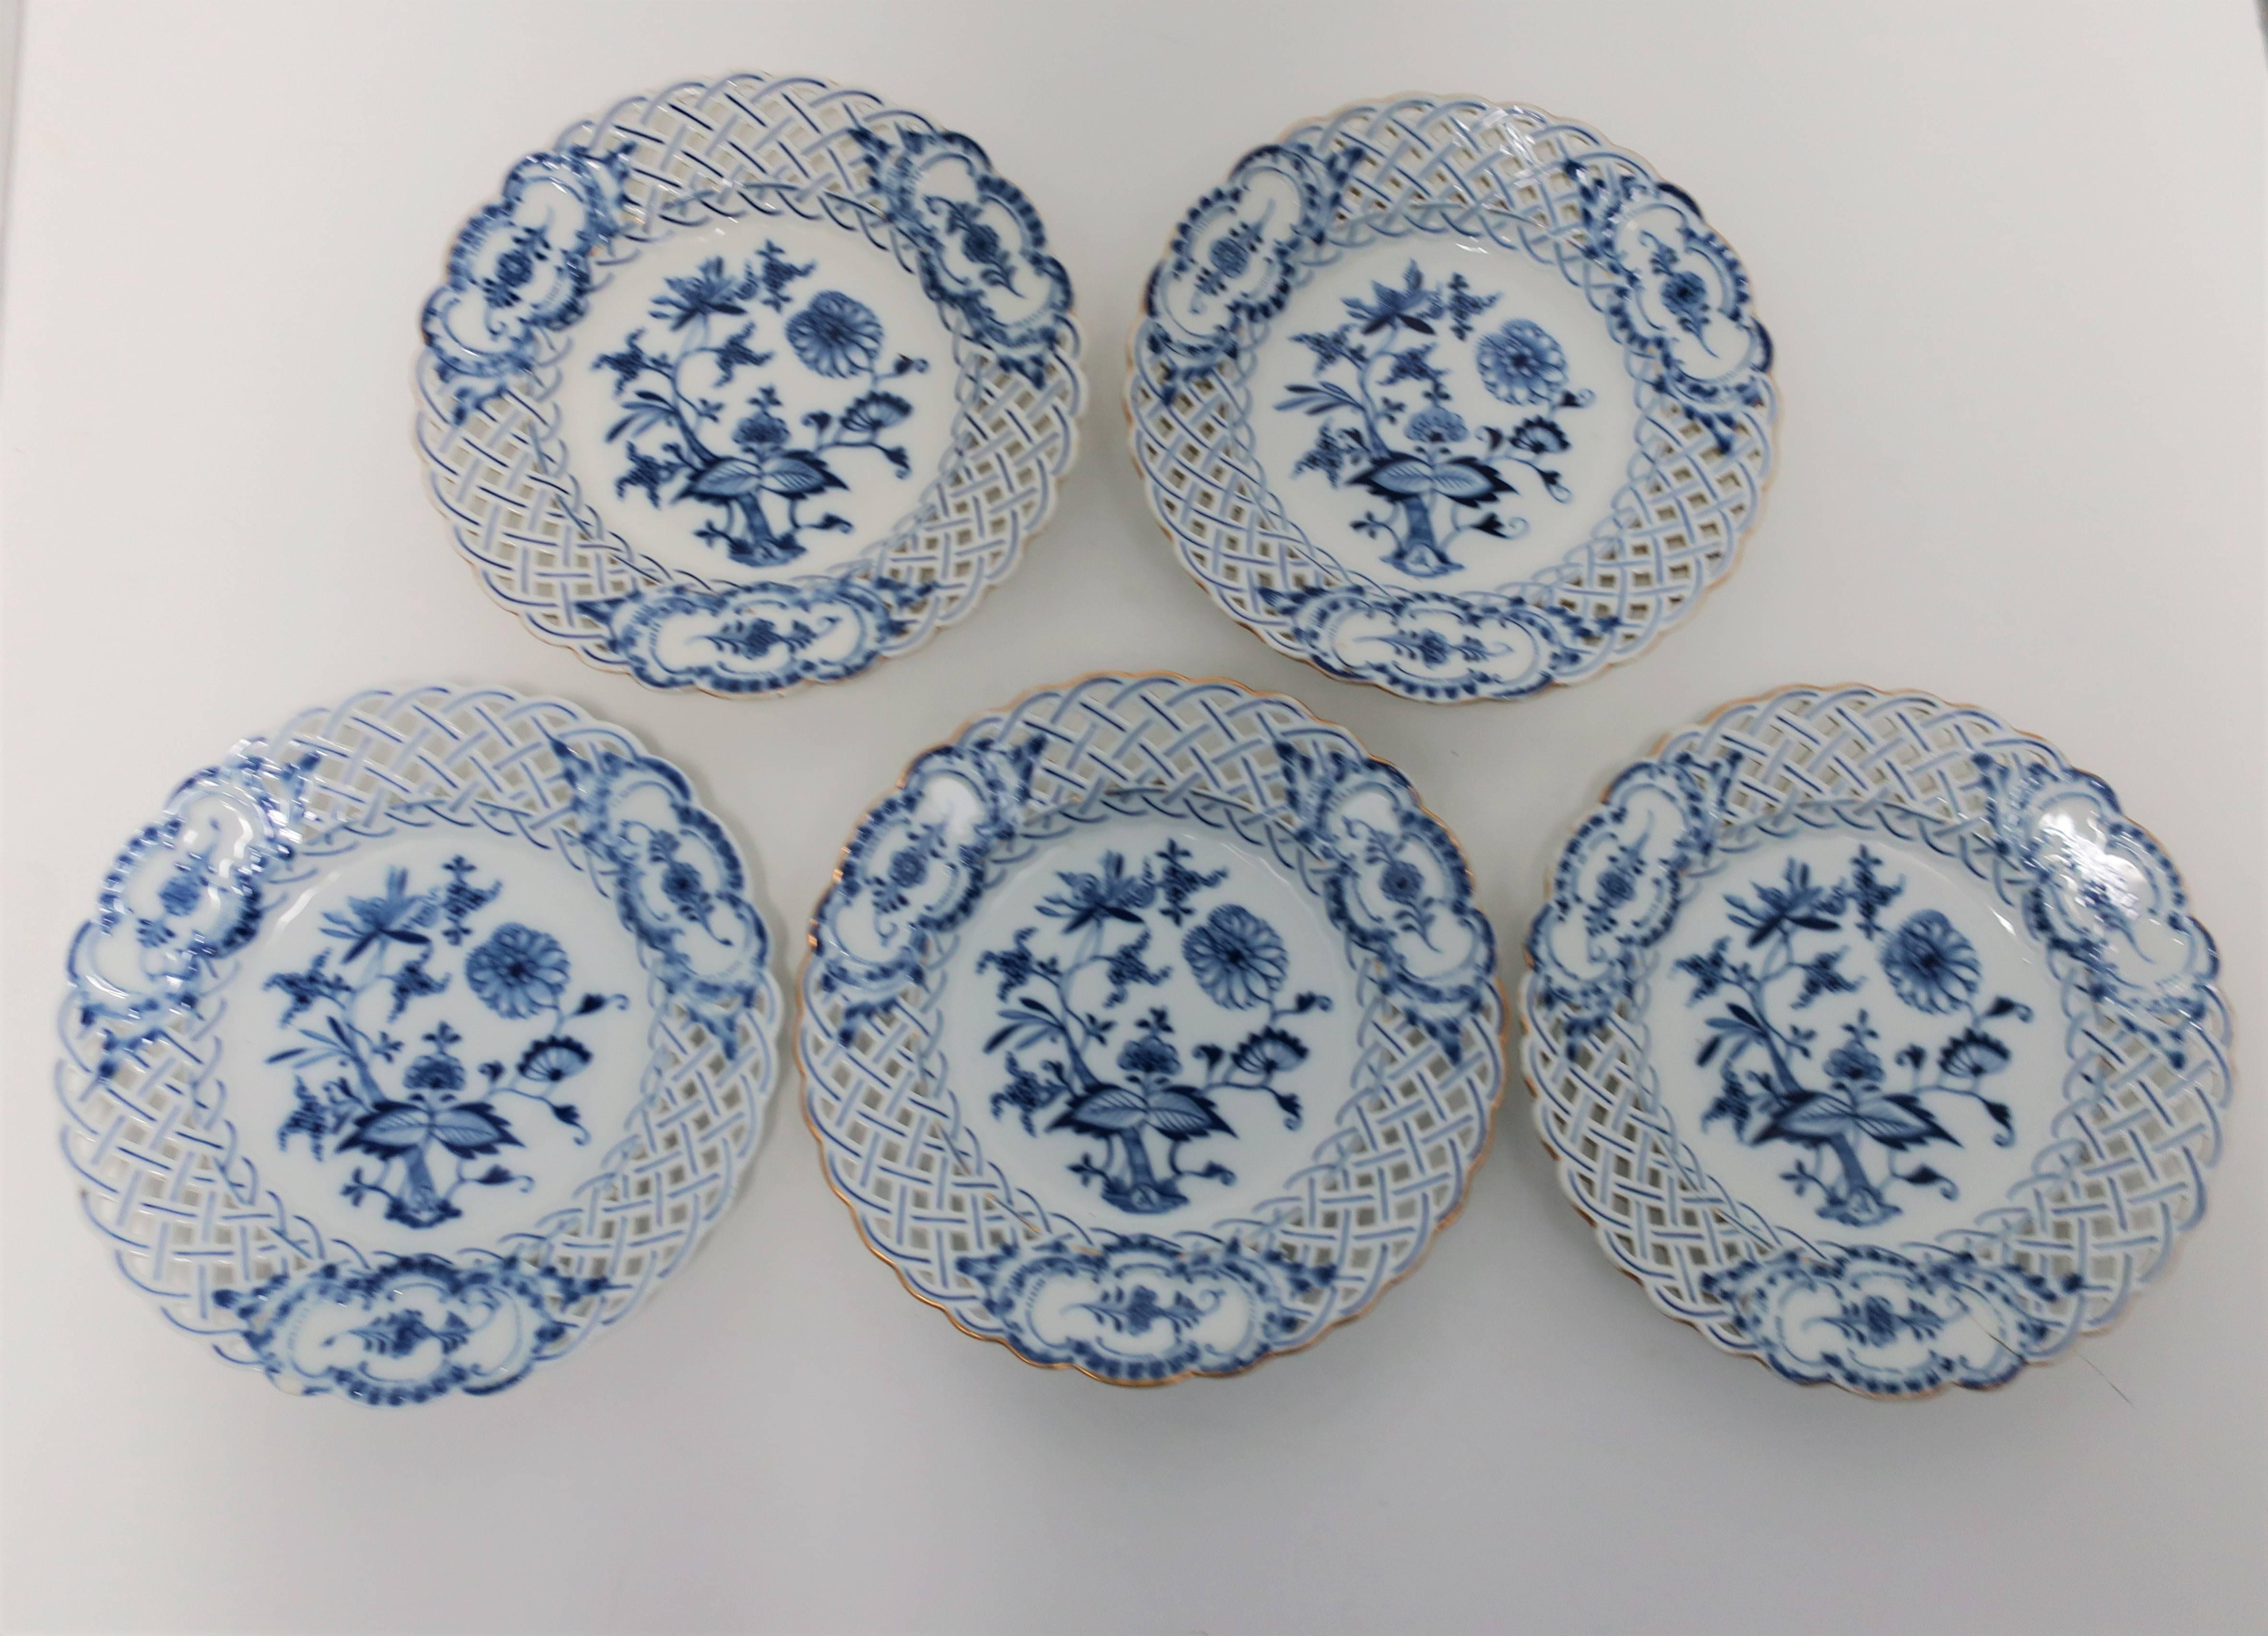 Glazed Blue and White Meissen Porcelain Plates